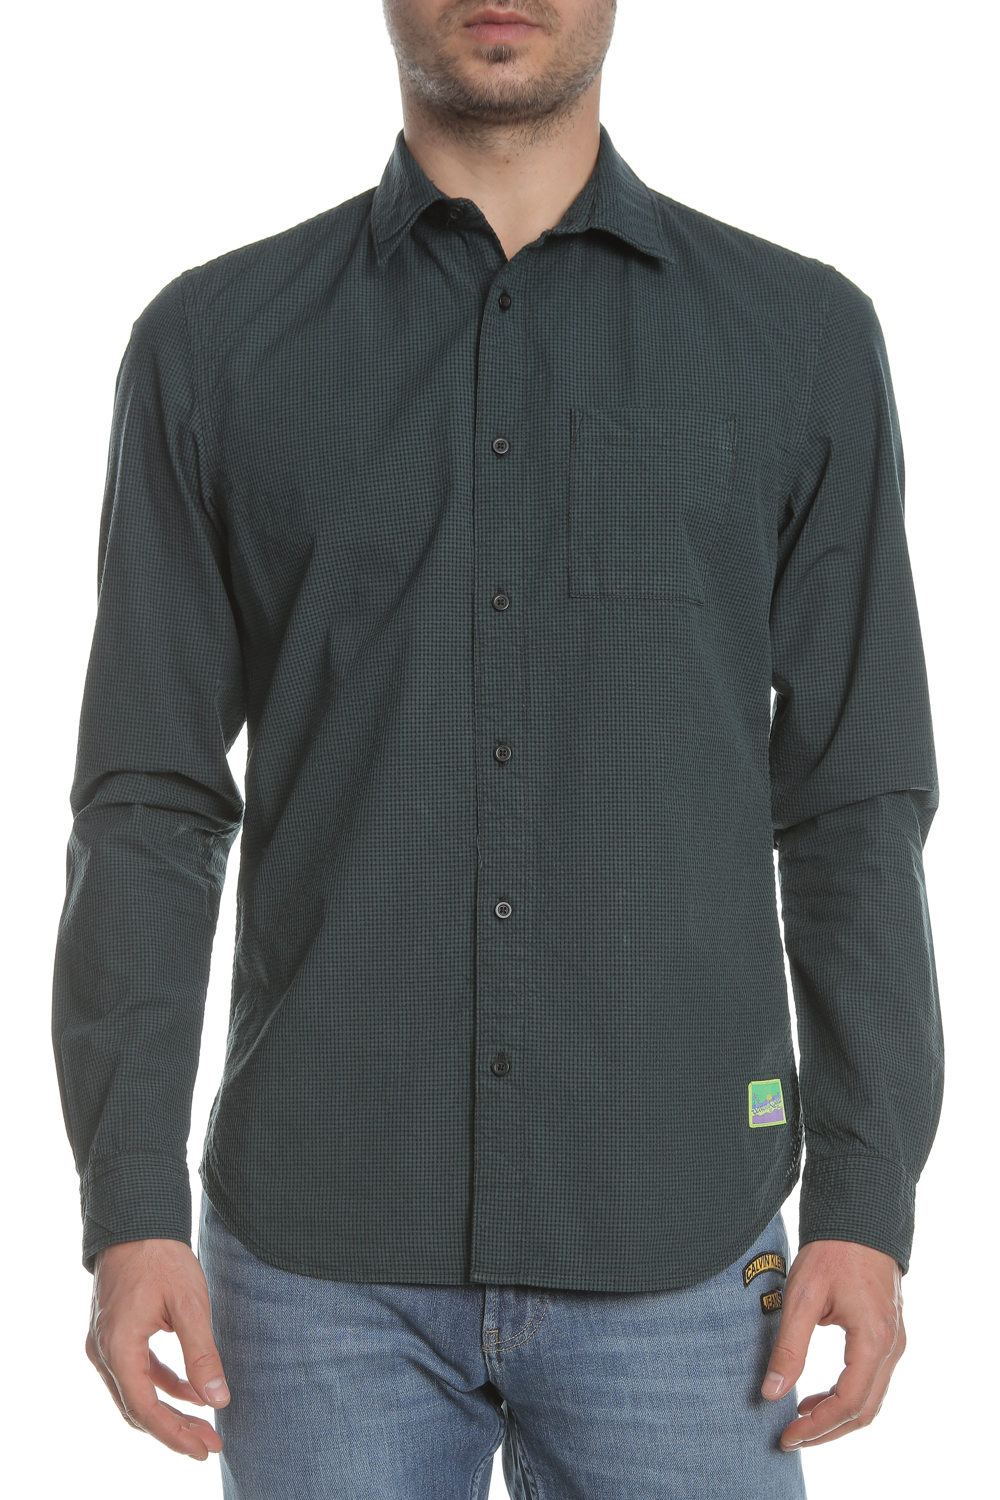 SCOTCH & SODA - Ανδρικό μακρυμάνικο πουκάμισο SCOTCH & SODA πράσινο Ανδρικά/Ρούχα/Πουκάμισα/Μακρυμάνικα